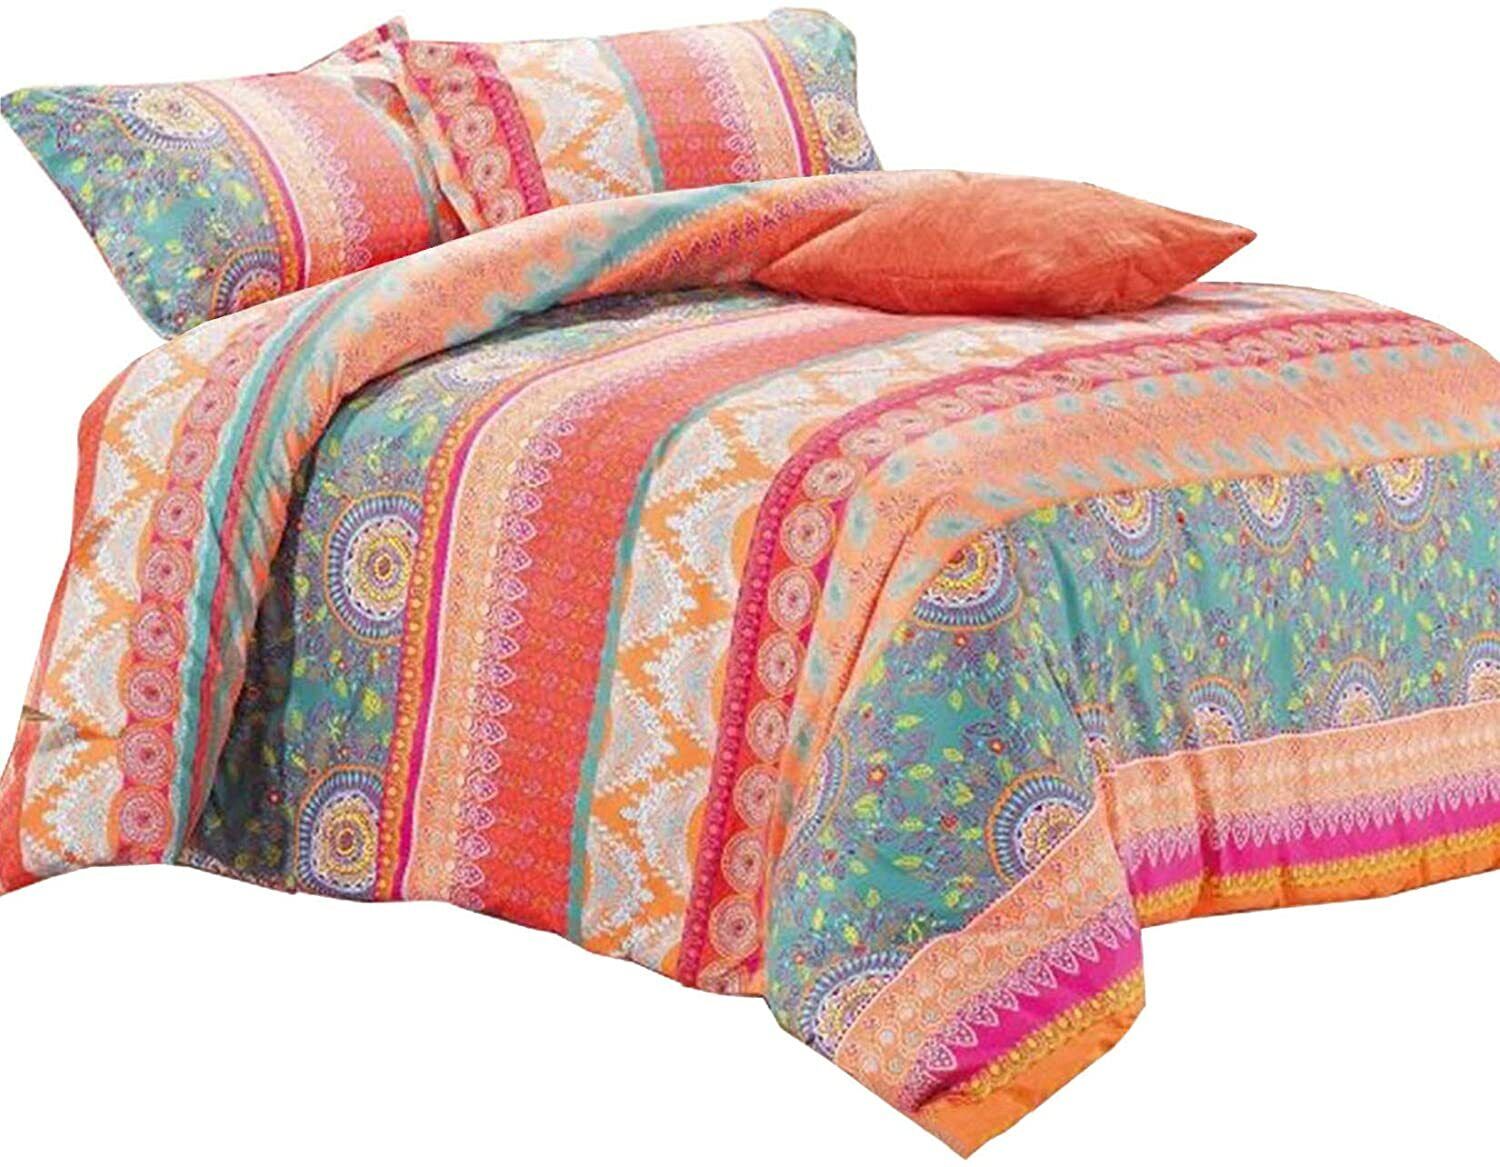 Wake In Cloud 3pcs, King Size Soft Microfiber Bedspread Coverlet Bedding Bohemian Quilt Set Orange Coral and Green Boho Chic Mandala Pattern Printed 